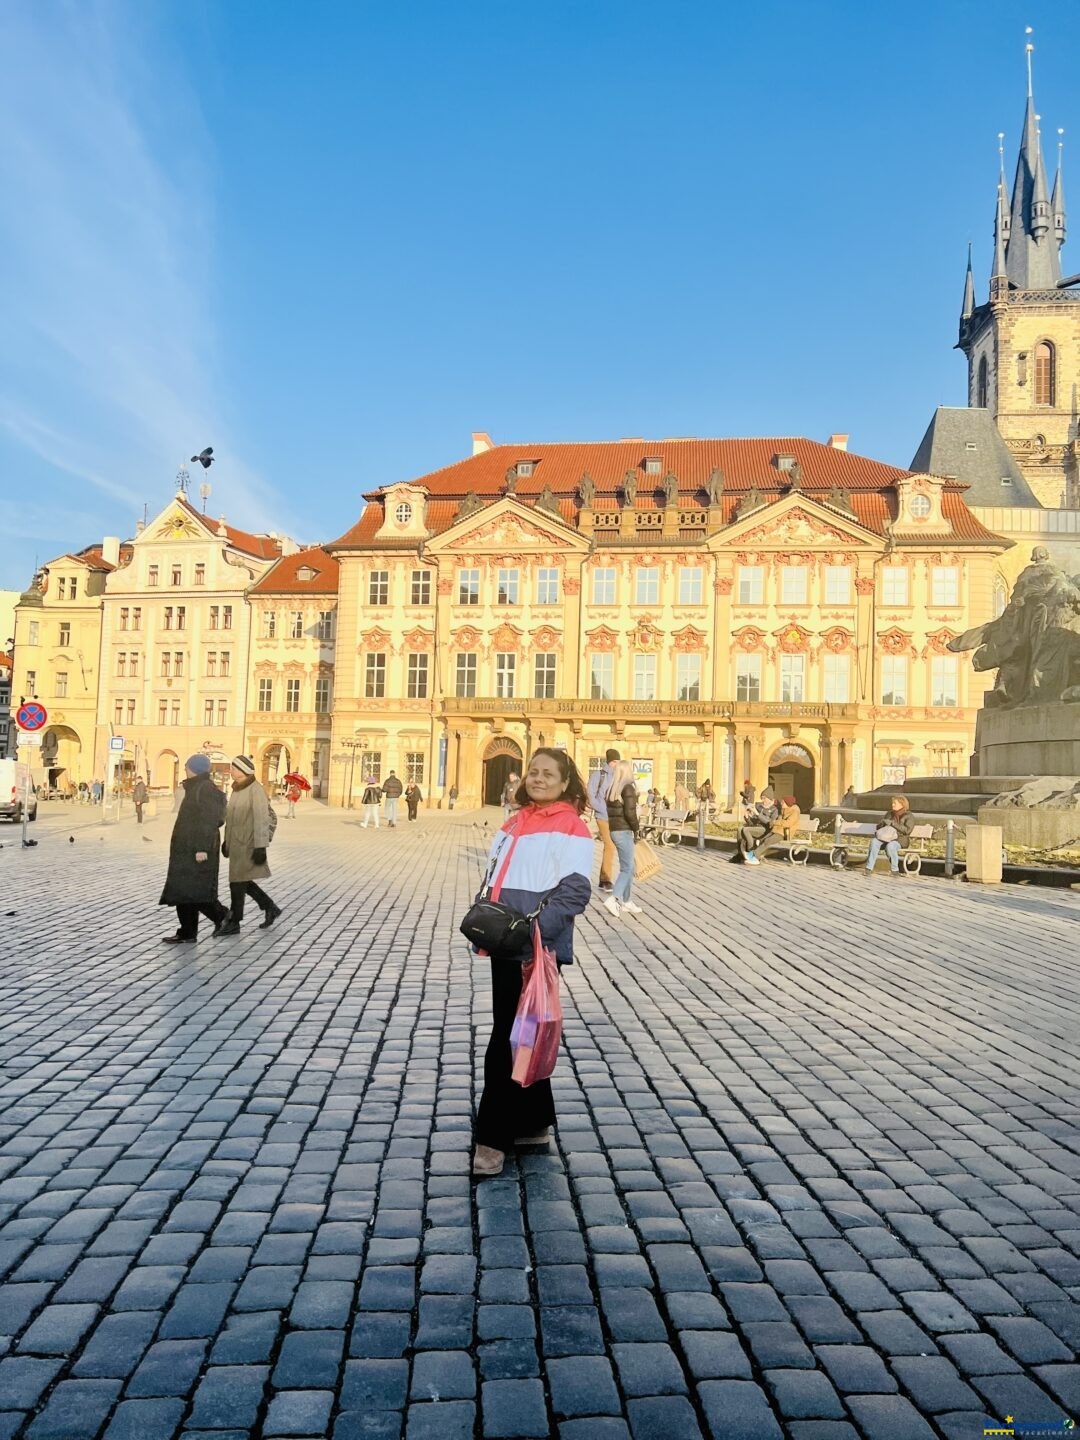 Plaza de la ciudad vieja de Praga